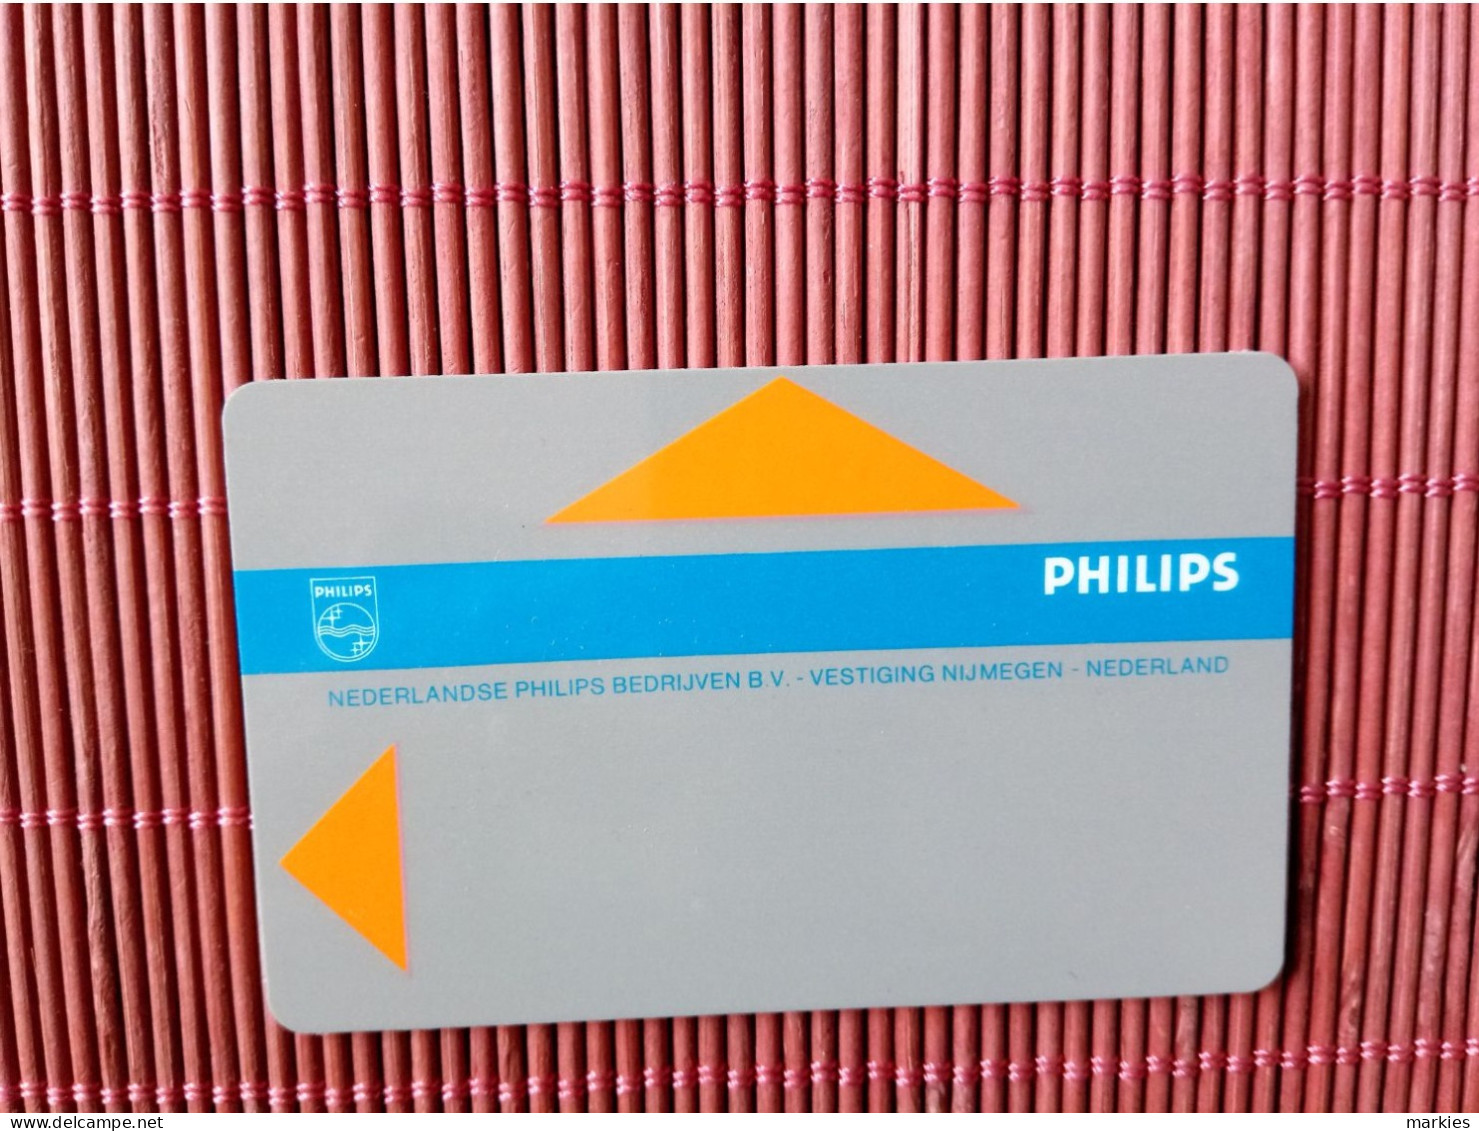 Philips Acrd  2 Scans  Rare - Unknown Origin